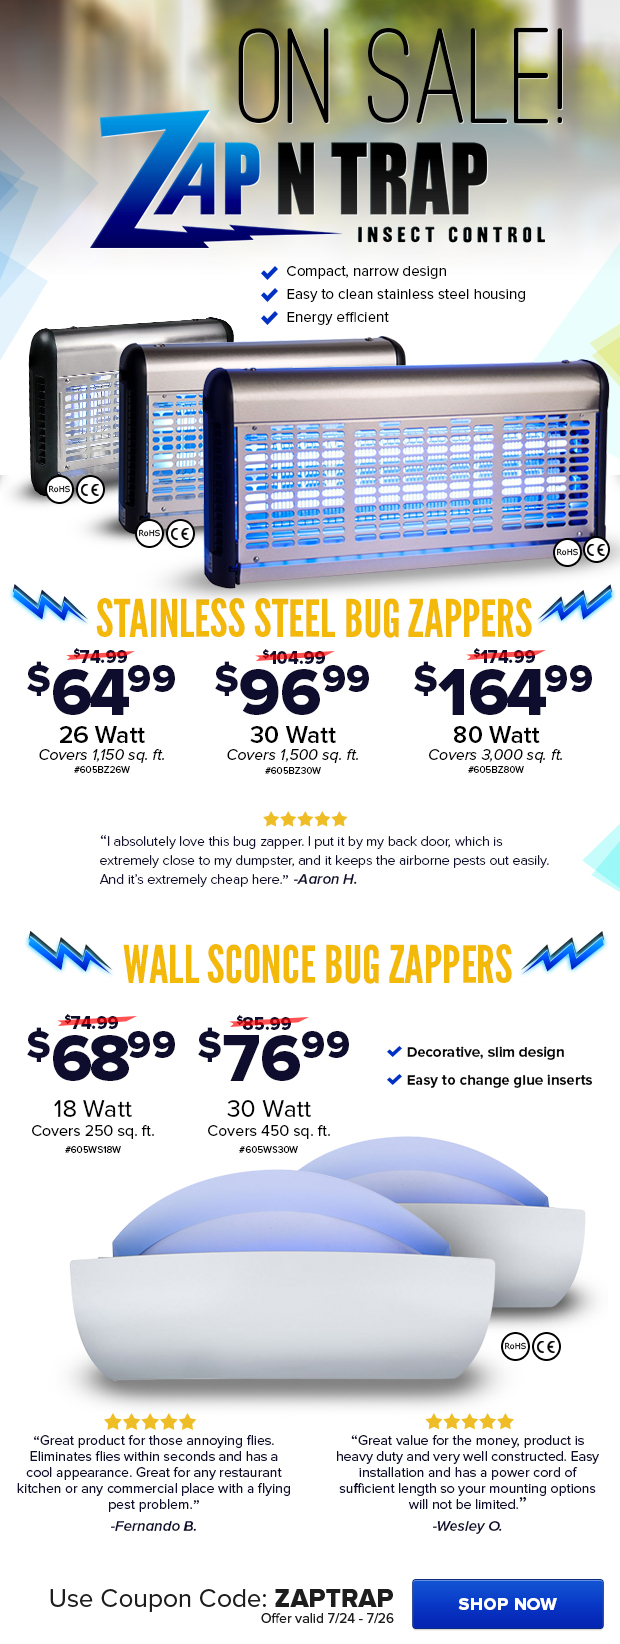 Zap N' Trap Bug Zappers on Sale!